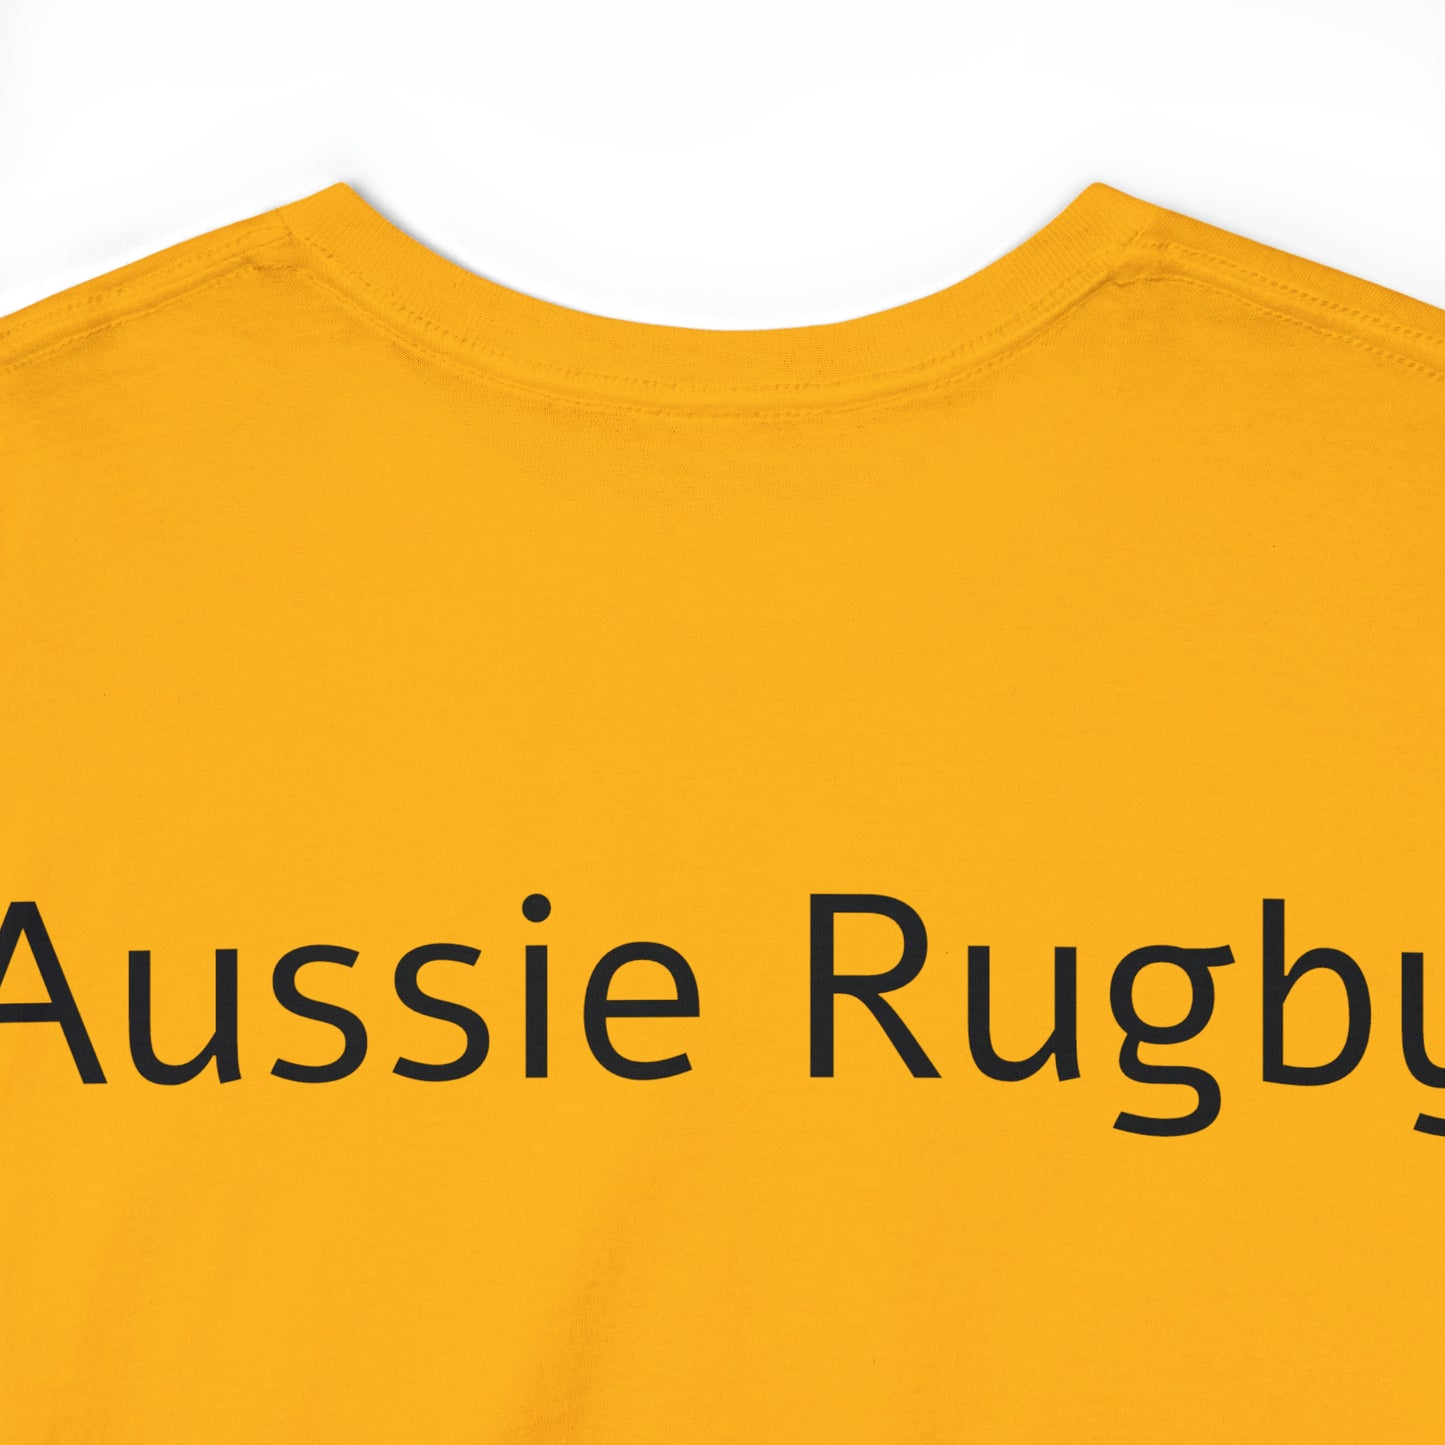 Ready Australia - light shirts